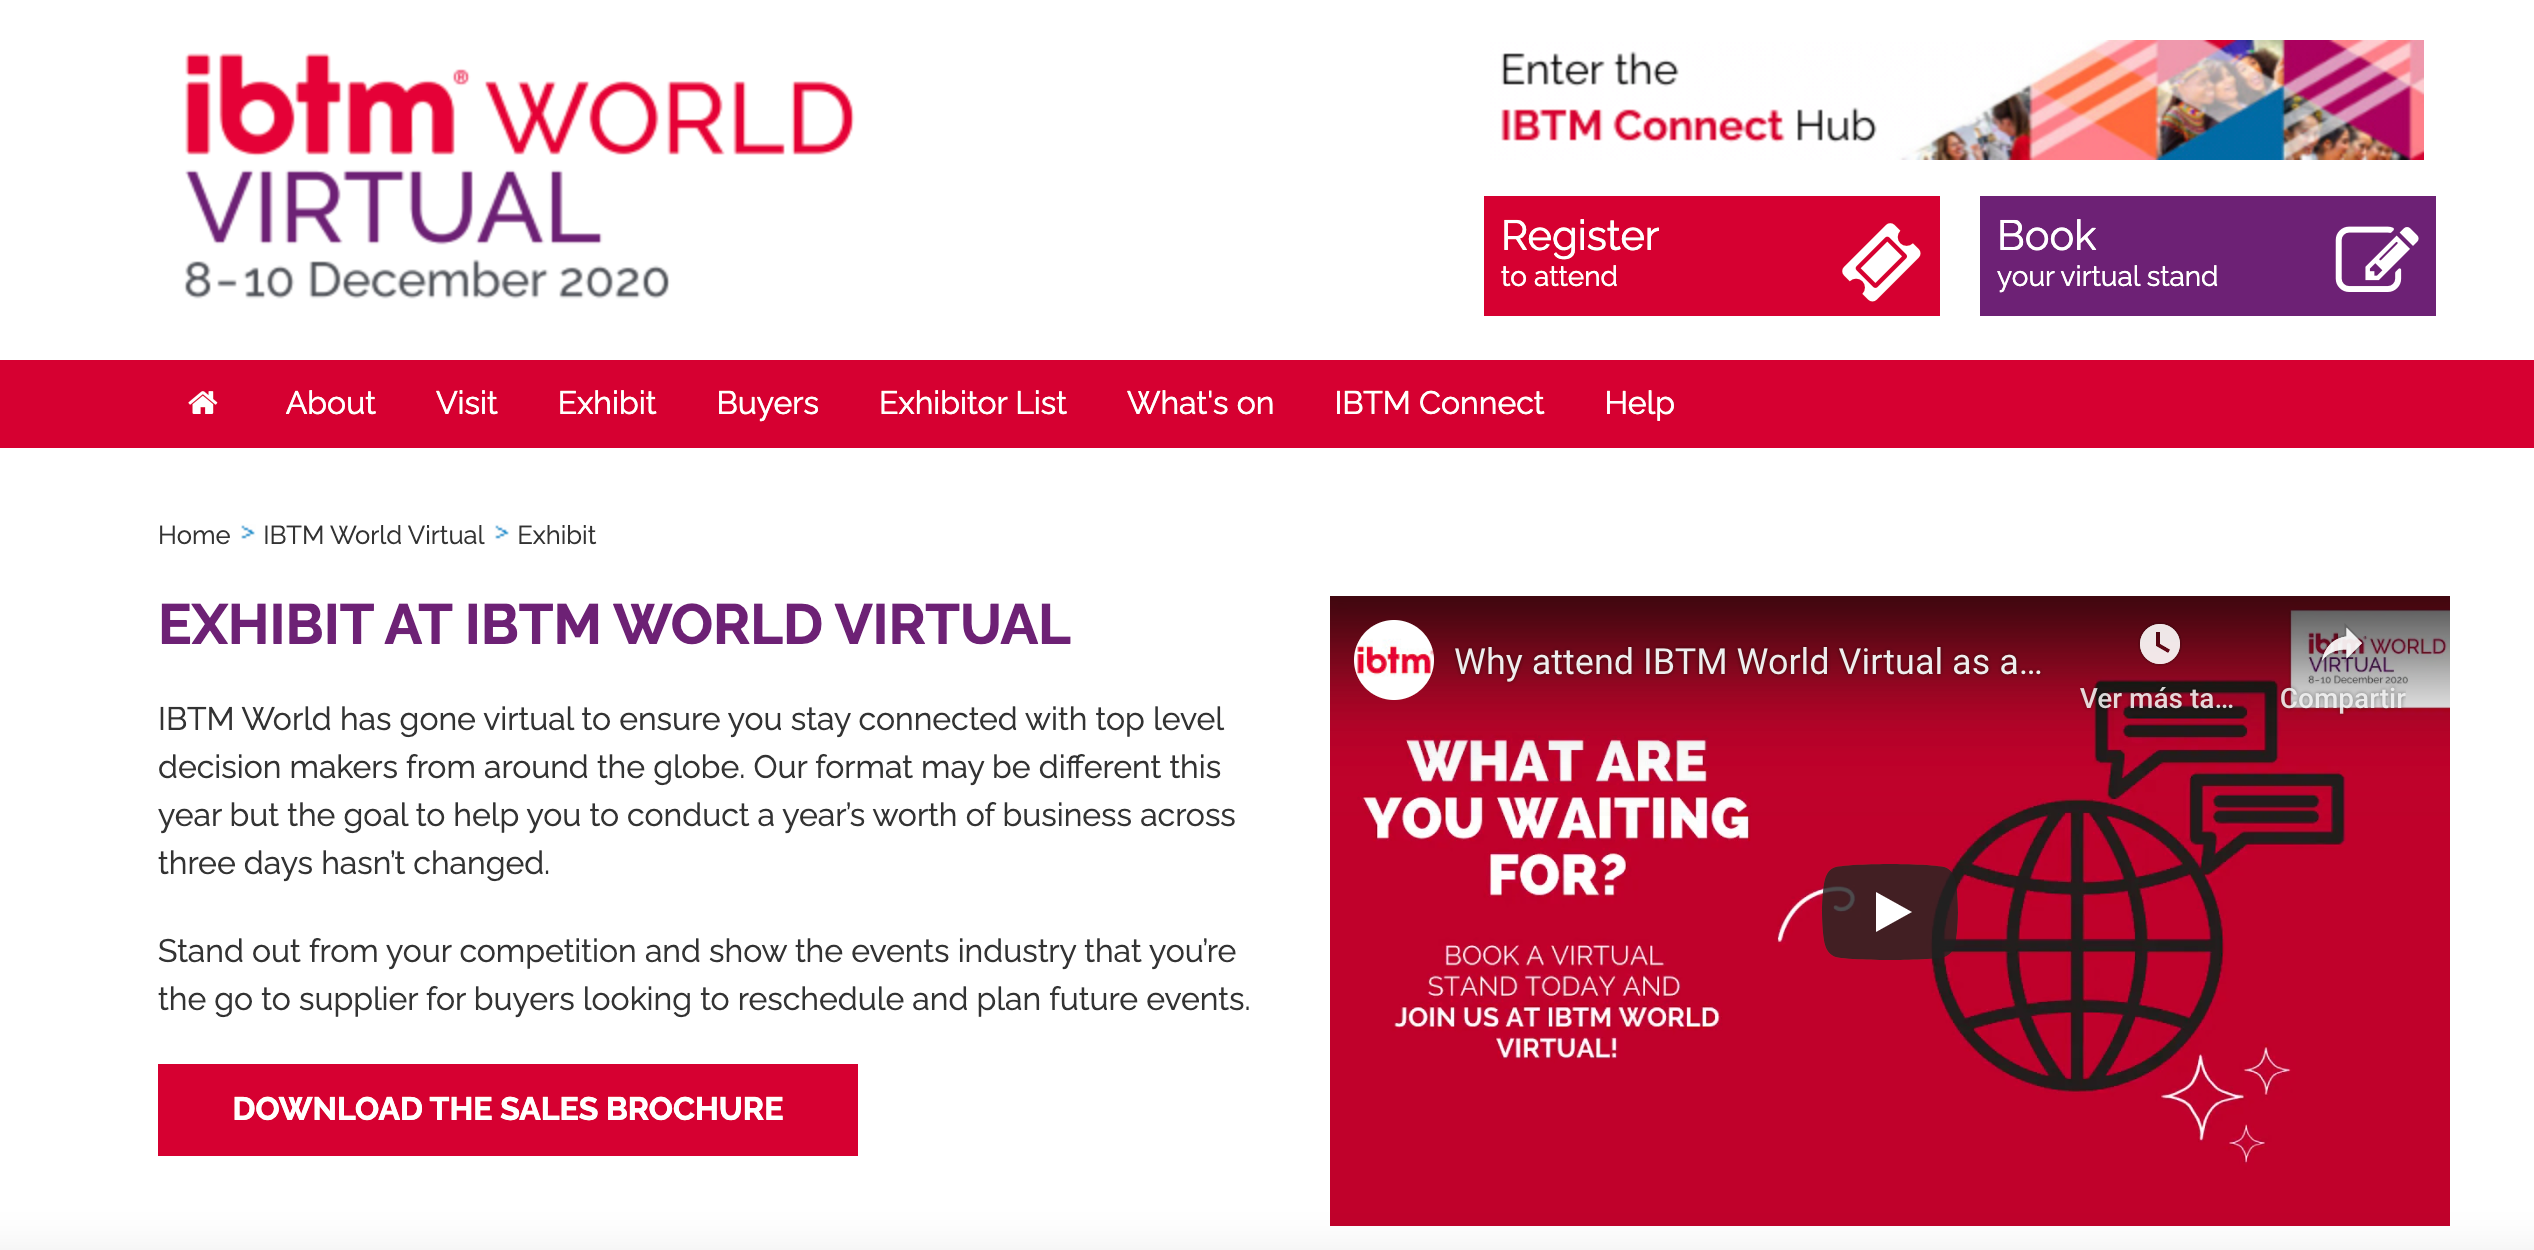 IBTM World Virtual 2020 